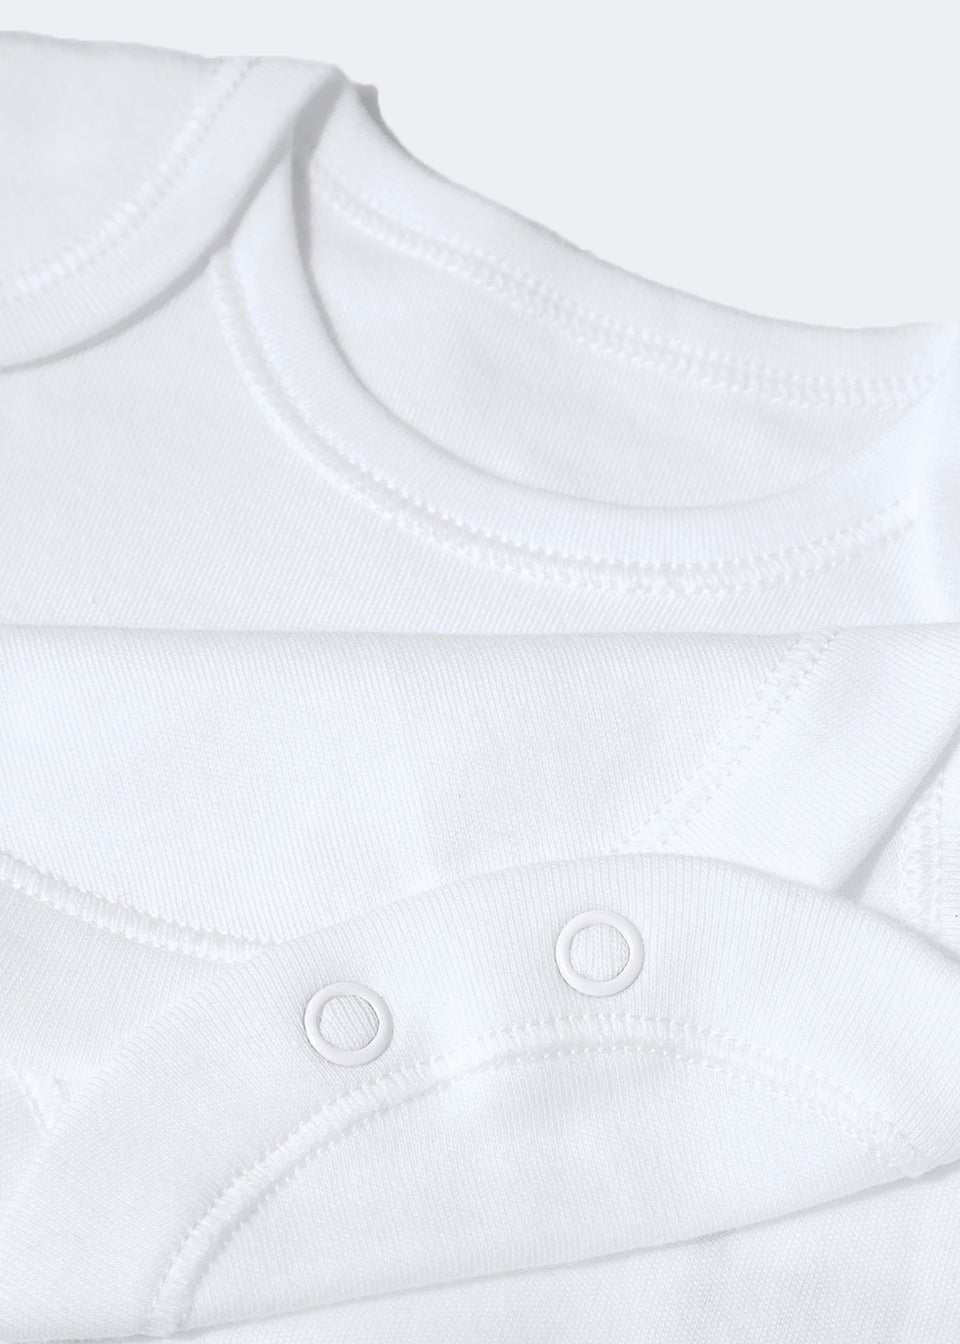 Baby 5 Pack White Bodysuits (Tiny Baby-23mths)